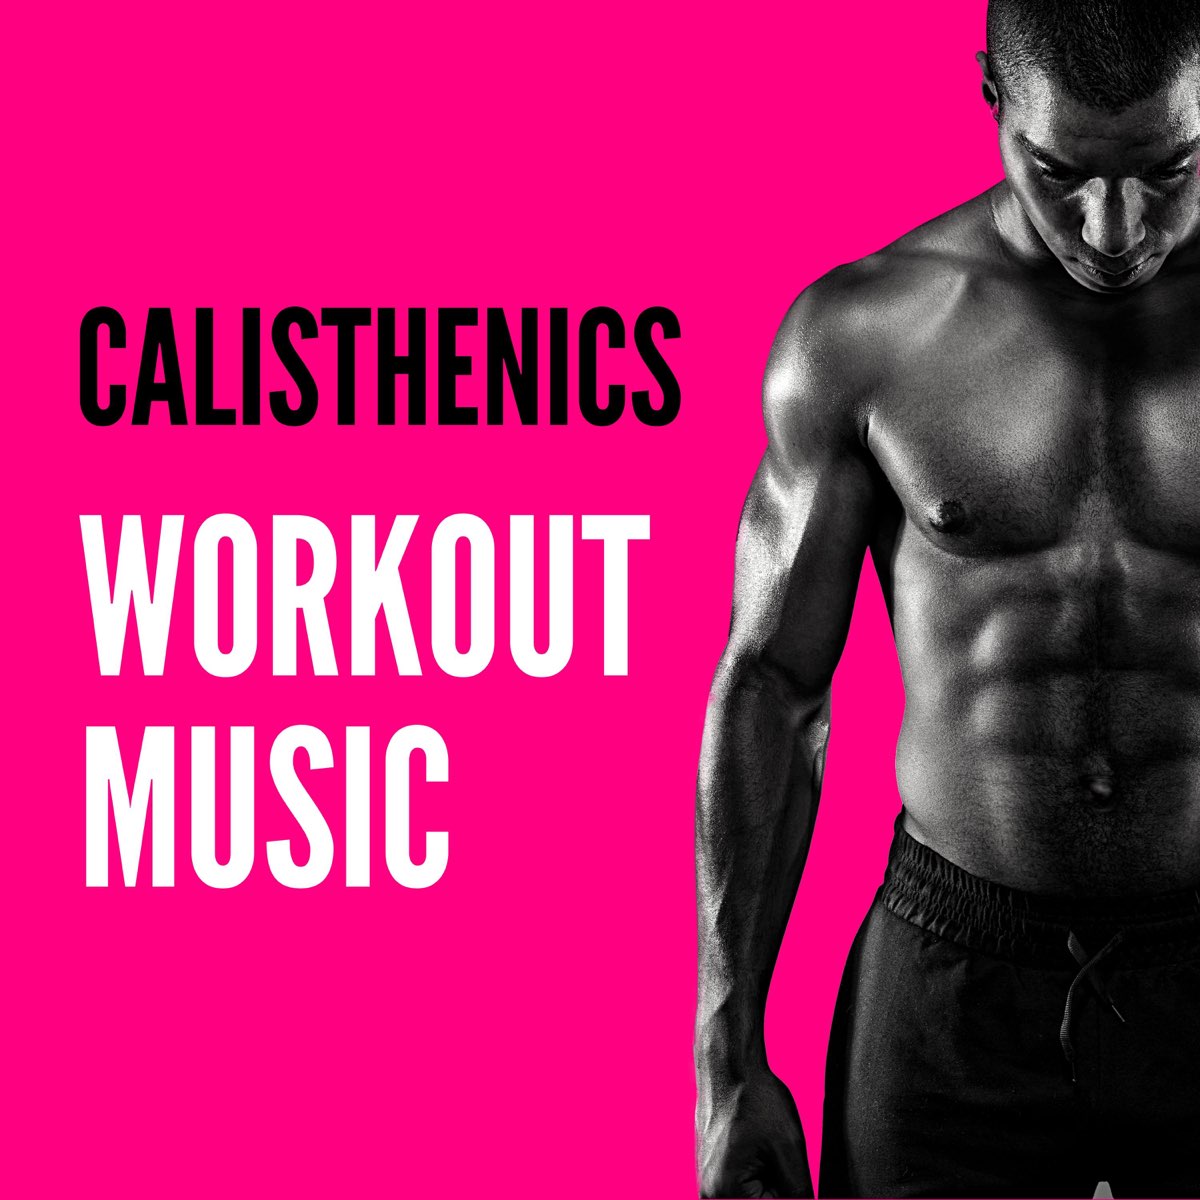 Workout & Calisthenics Motivations